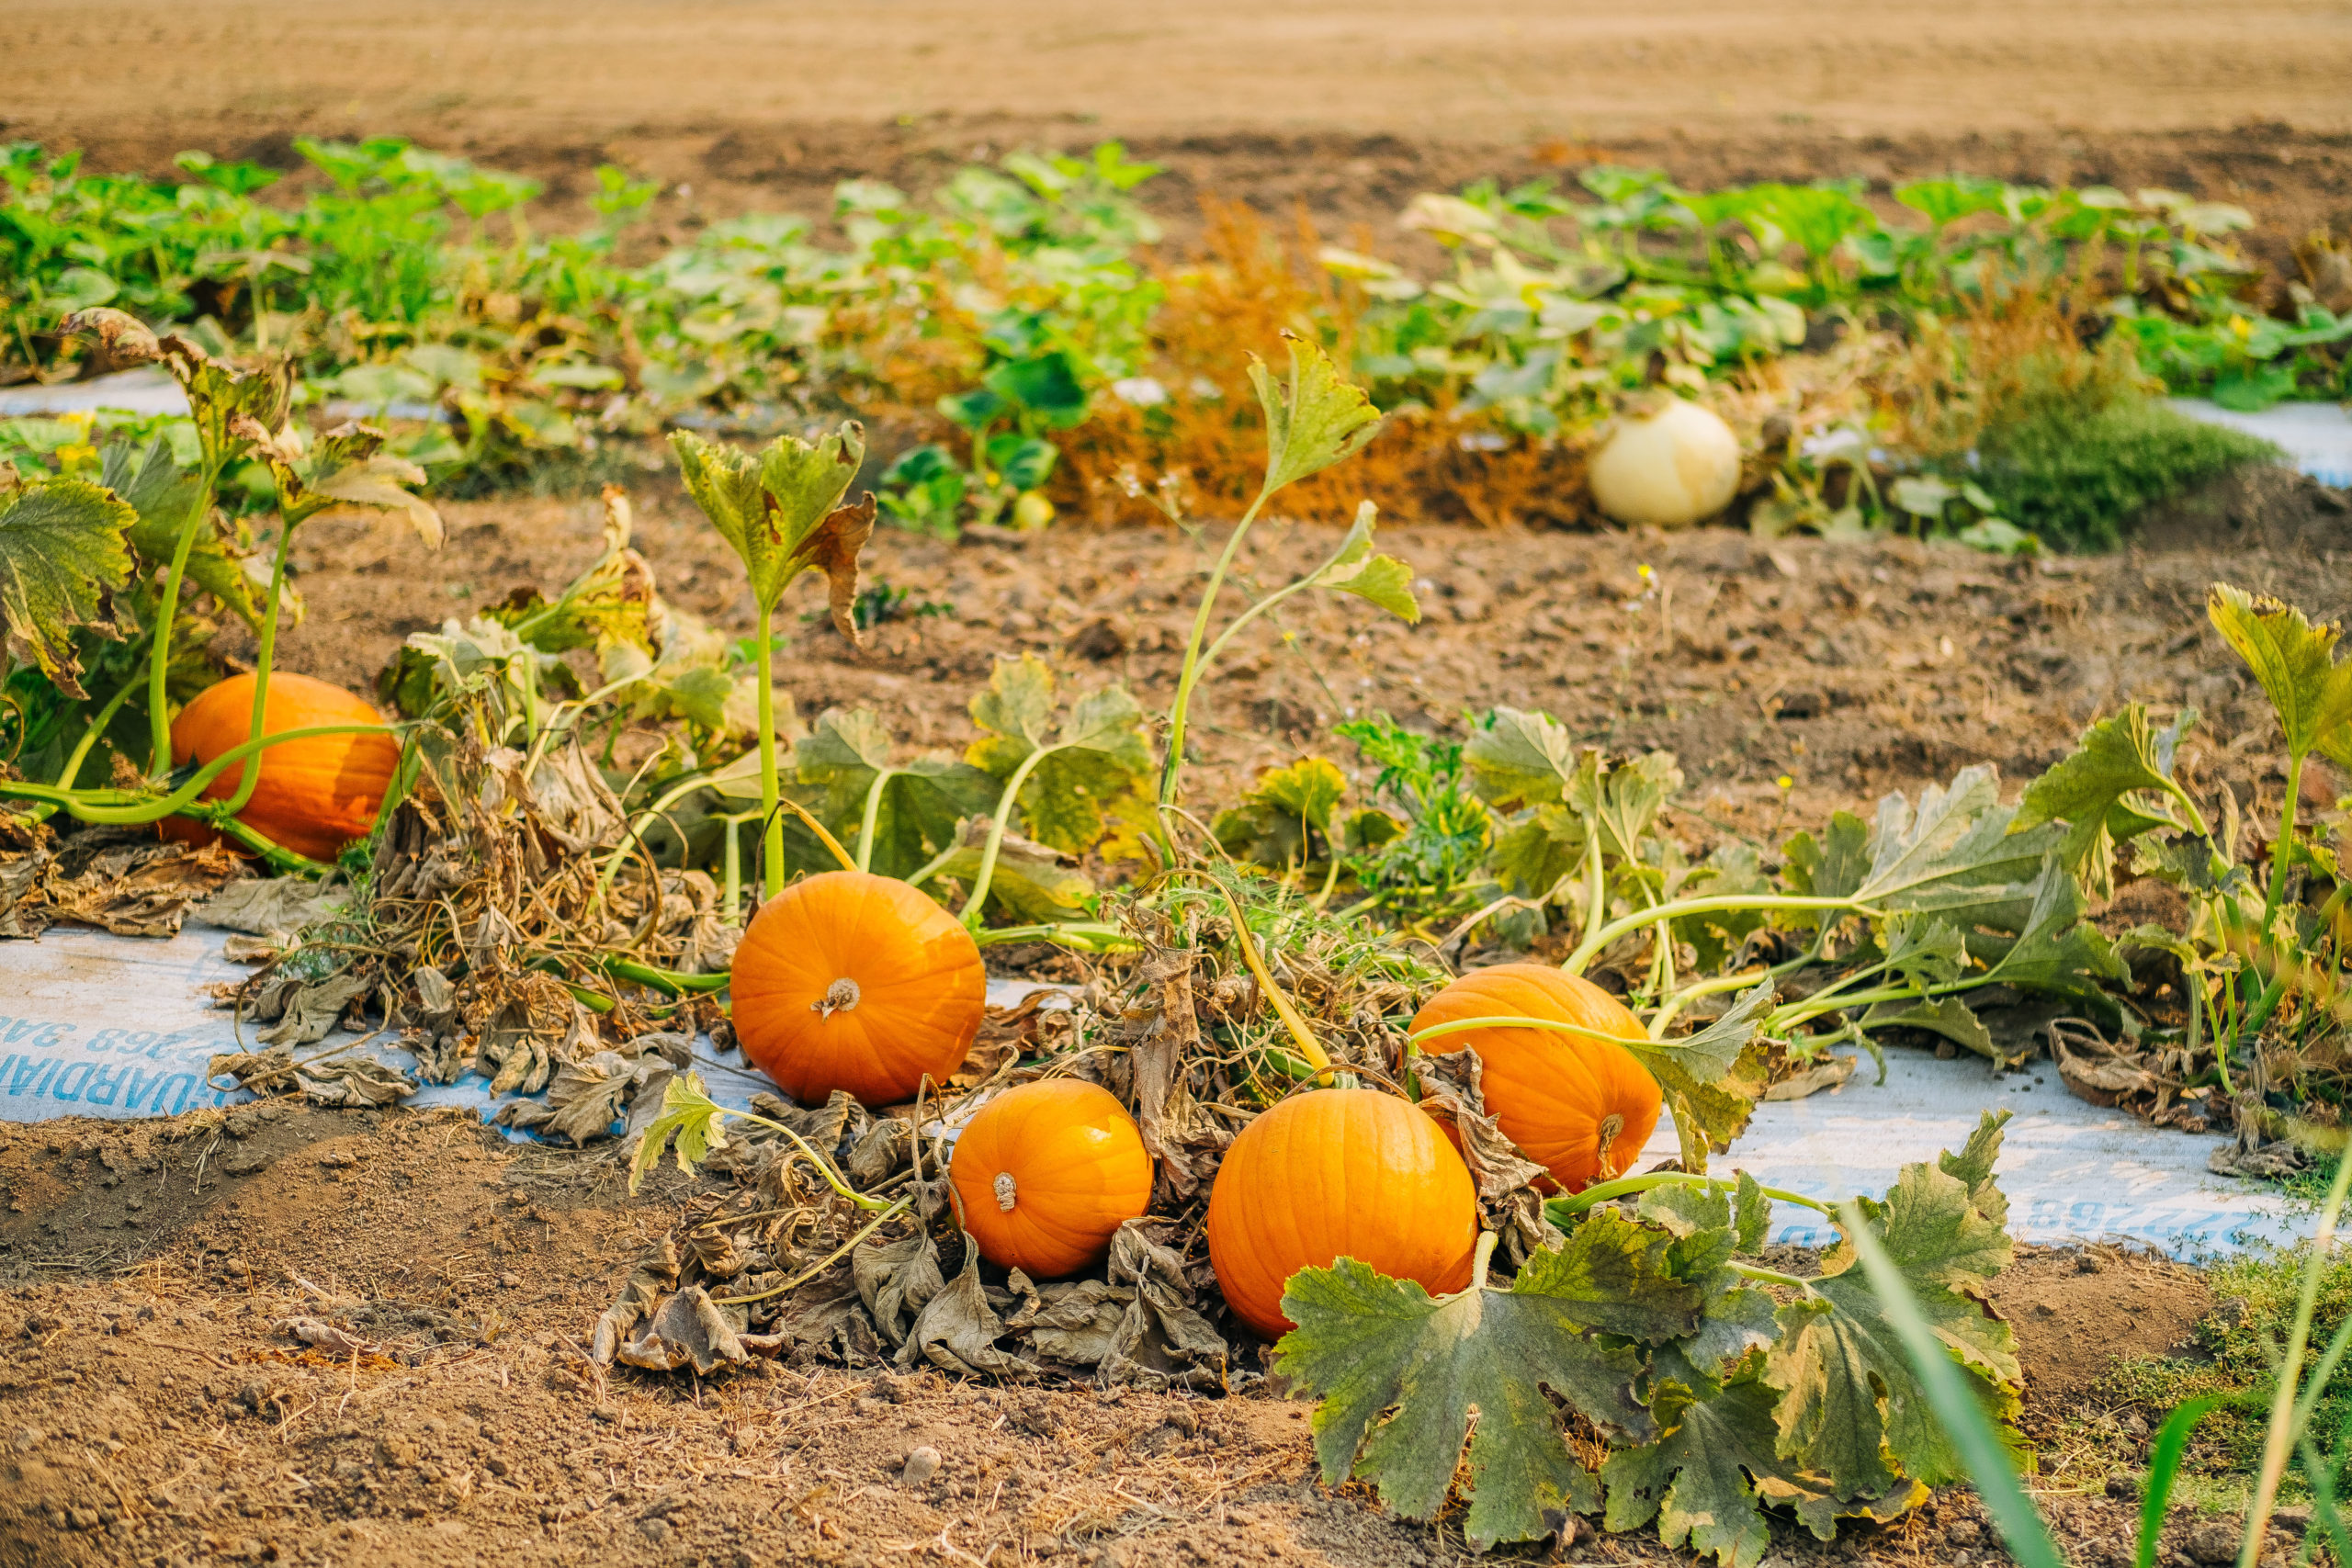 Oklahoma Pumpkin Patch Grow Businesses Struggle to Grow Pumpkins Amid Drought